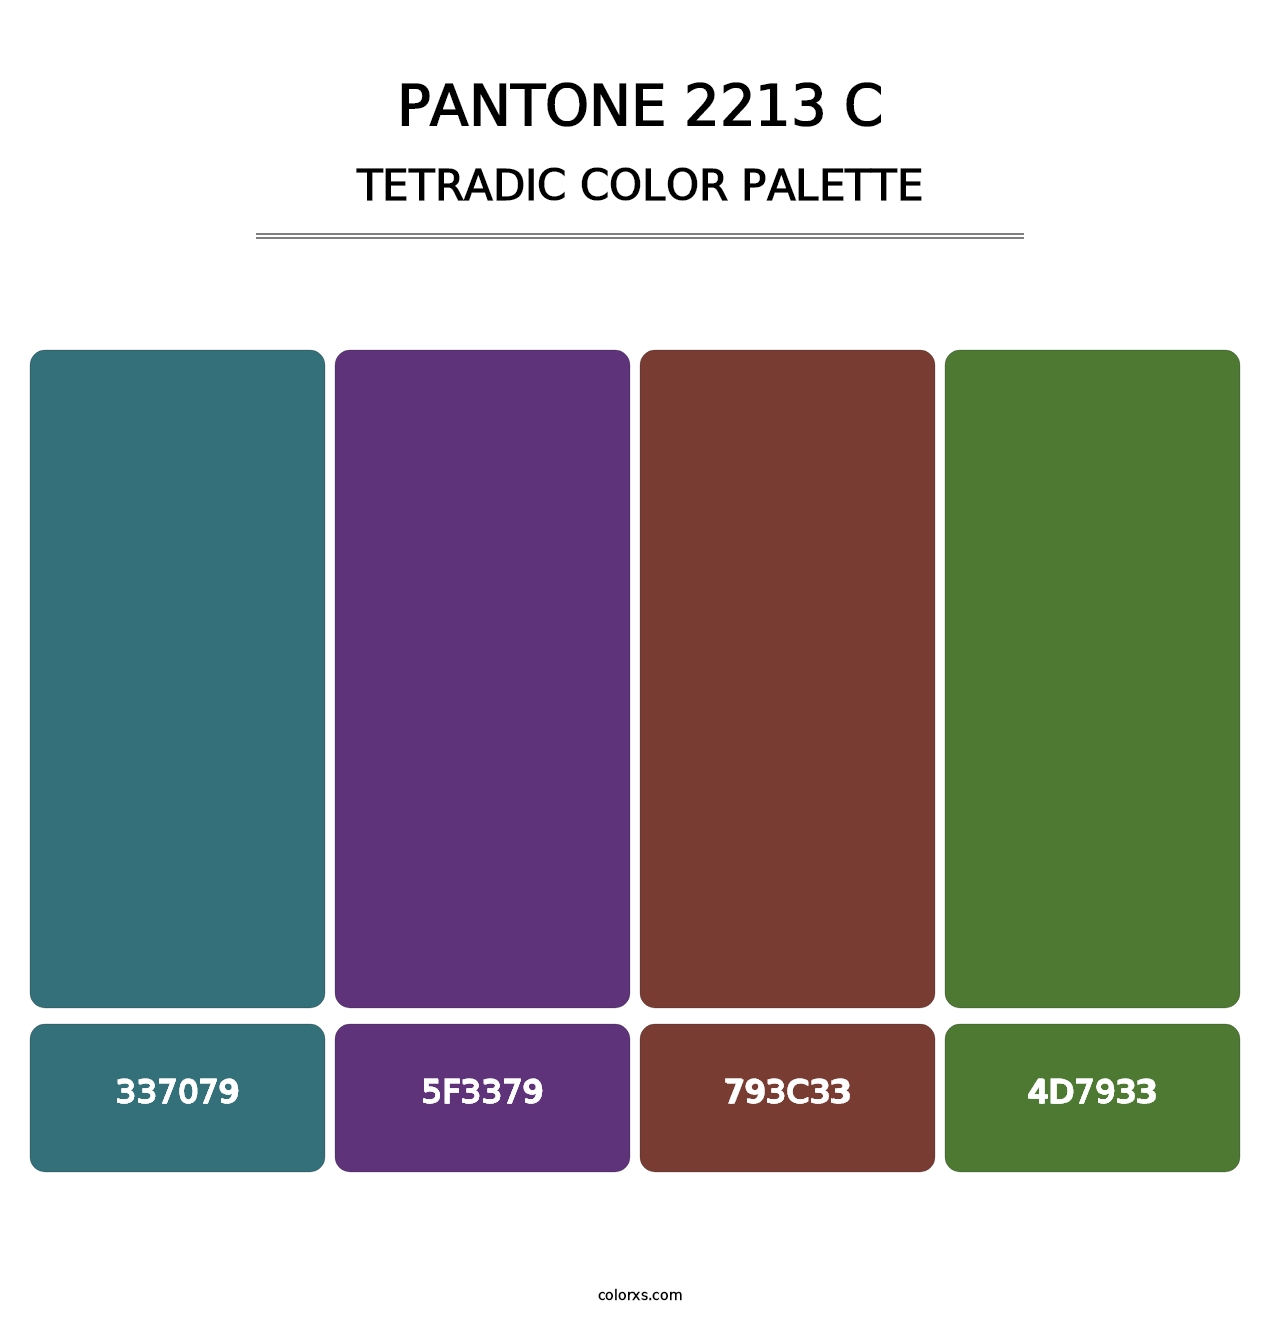 PANTONE 2213 C - Tetradic Color Palette